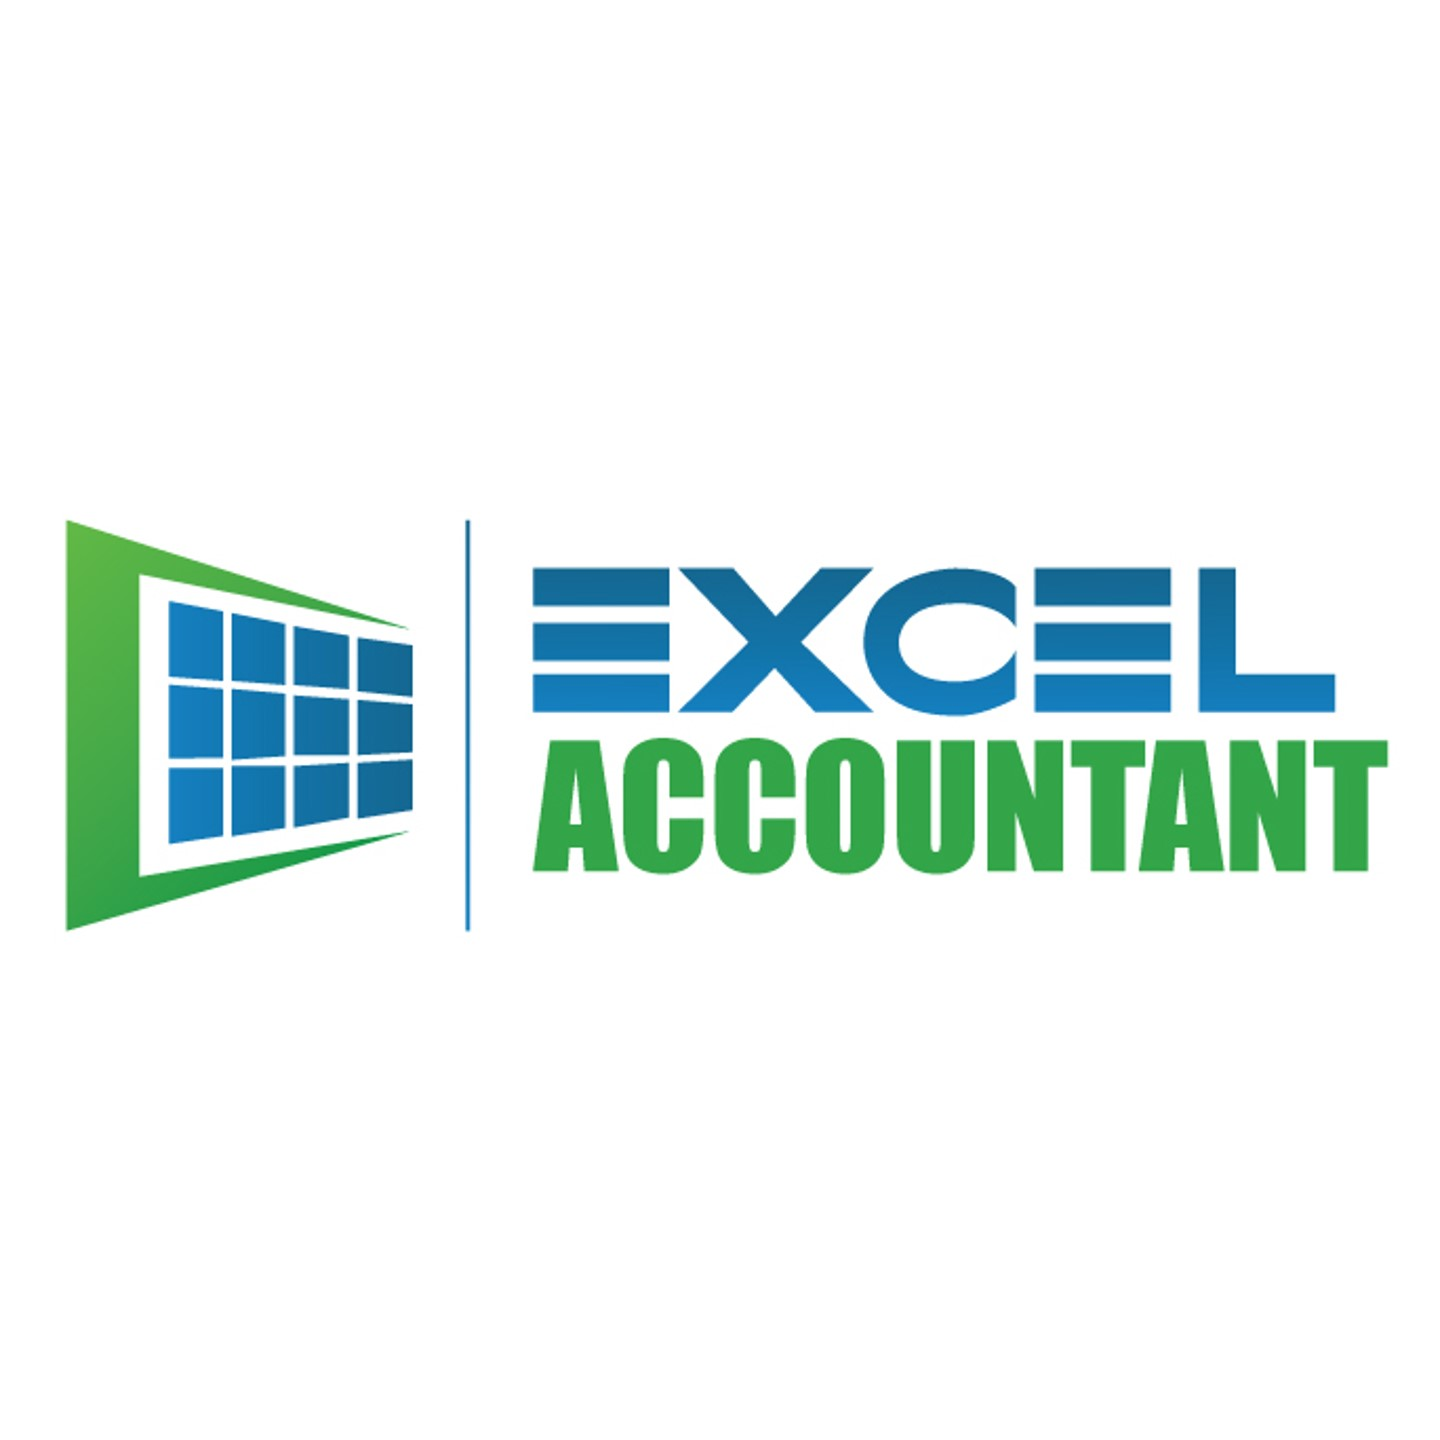 Excel Accountant Logo